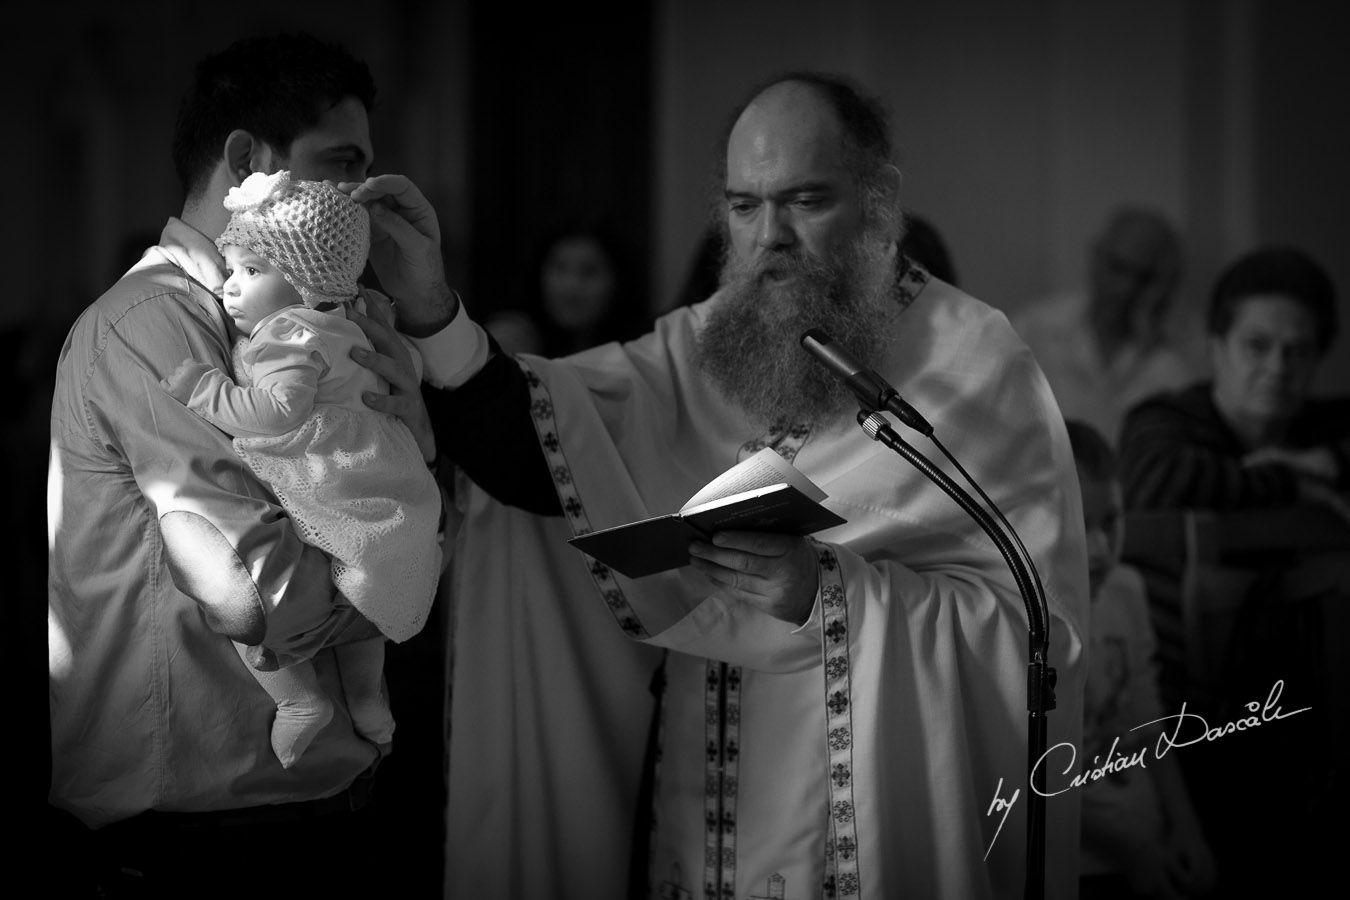 Christening Photography - A Touching Christening Tale. Photographer: Cristian Dascalu